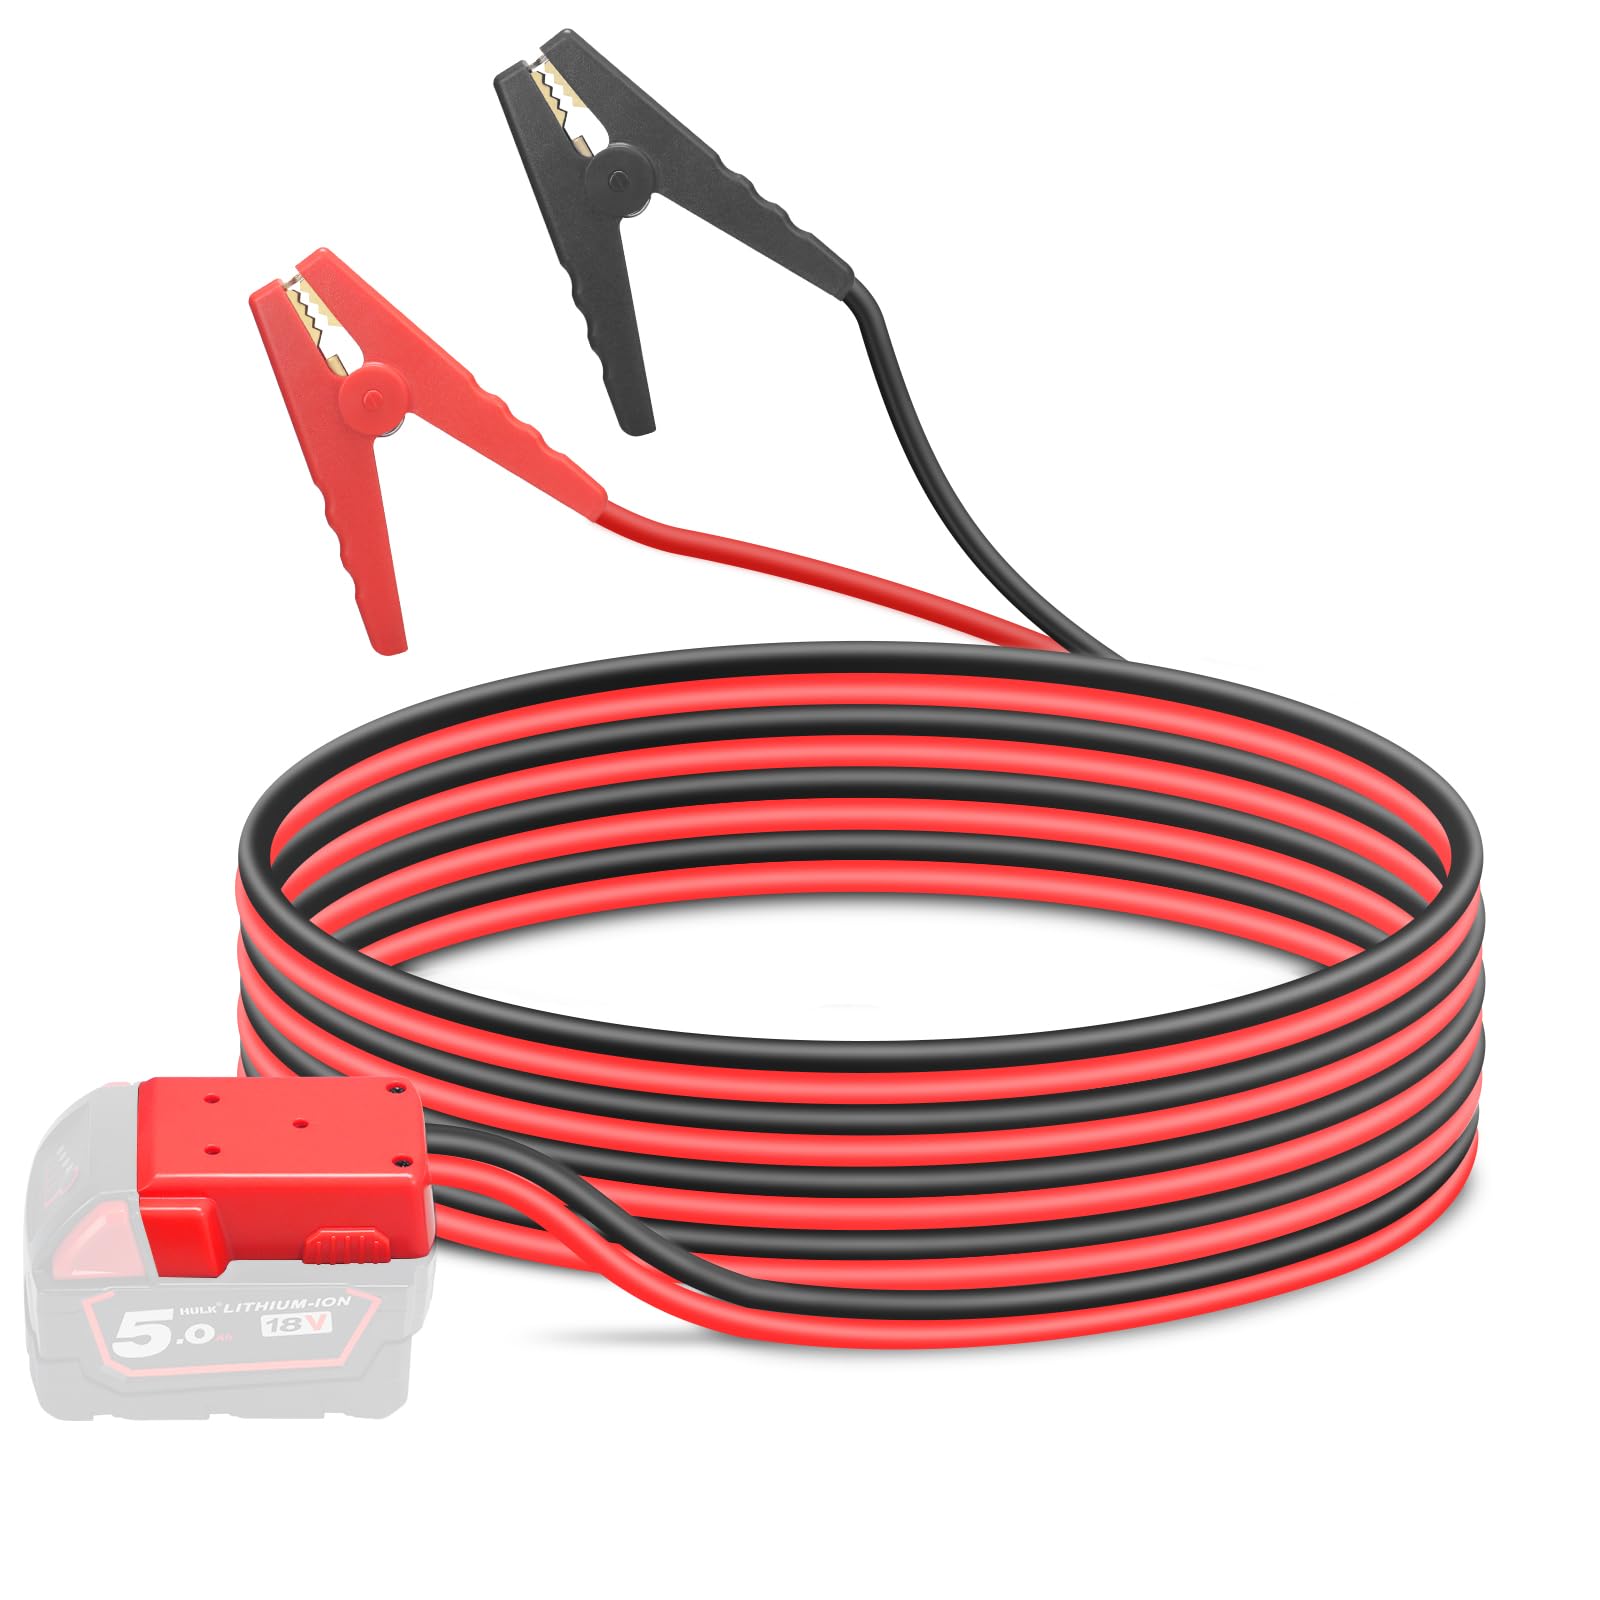 HUGOOME Kabel Power Tool Line, 2m 8.37mm² Starthilfekabel Klemmen für Milwaukee BL18 18V Akku-Starter, Automotive Booster Kabel von HUGOOME